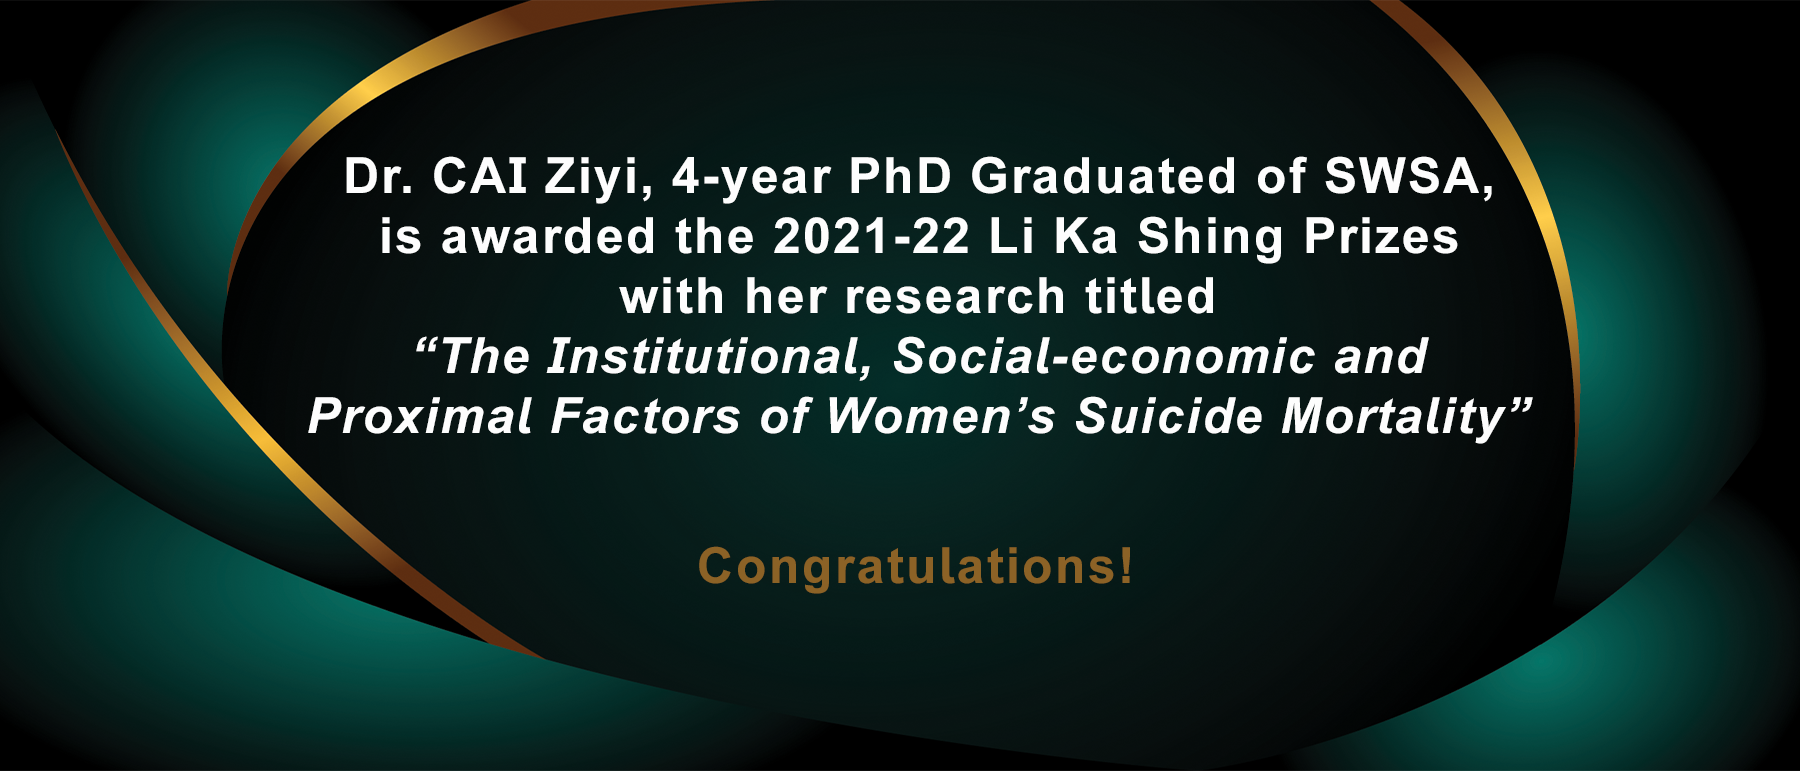 Li Ka Shing Prizes and HKU Foundation Award for Outstanding Research Postgraduate Students, 2021-22